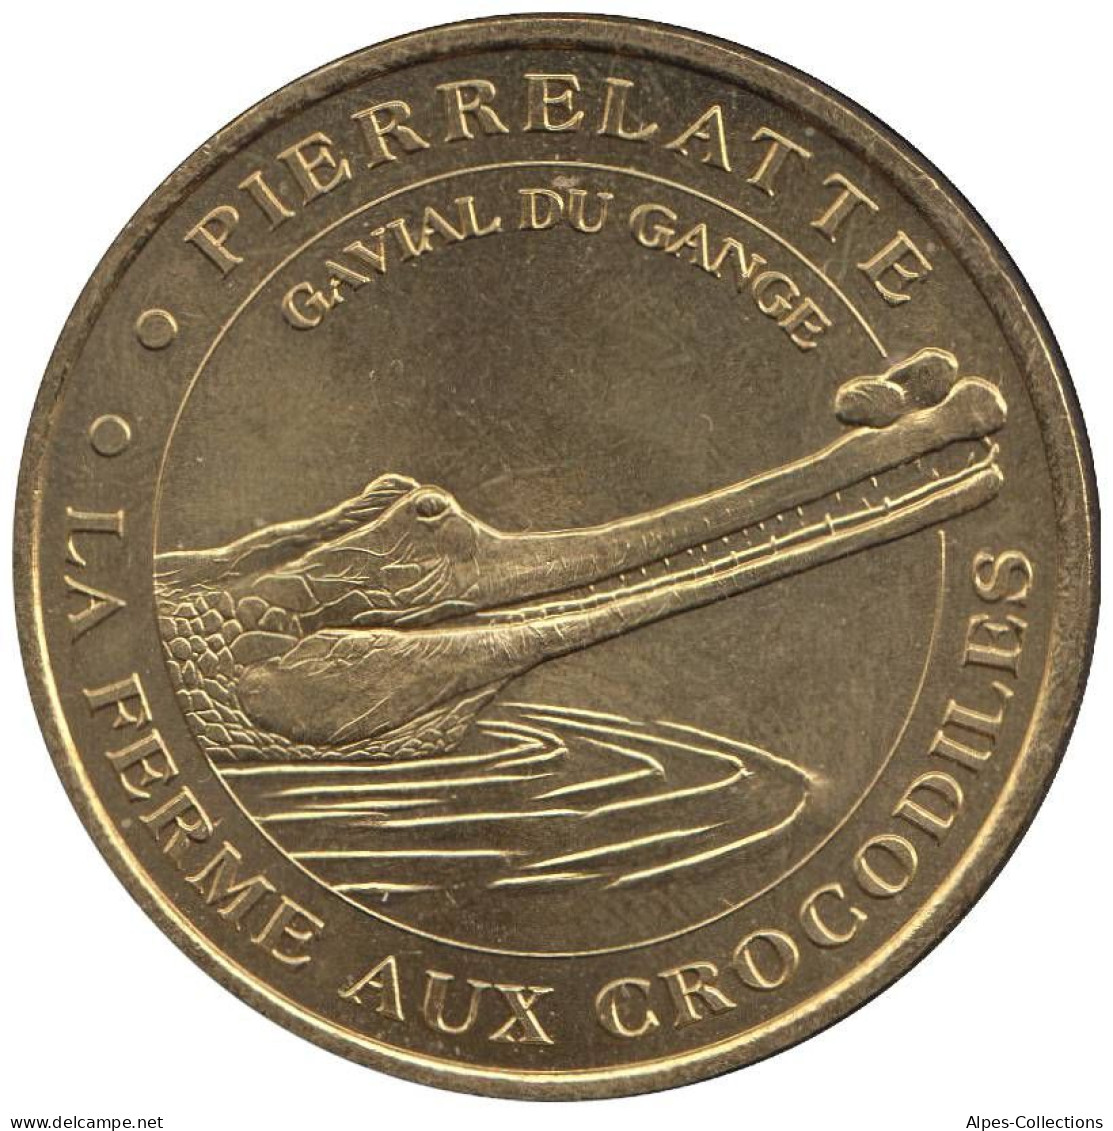 26-0084 - JETON TOURISTIQUE MDP - Ferme Crocodiles - Gavial Du Gange - 2001.1 - 2001